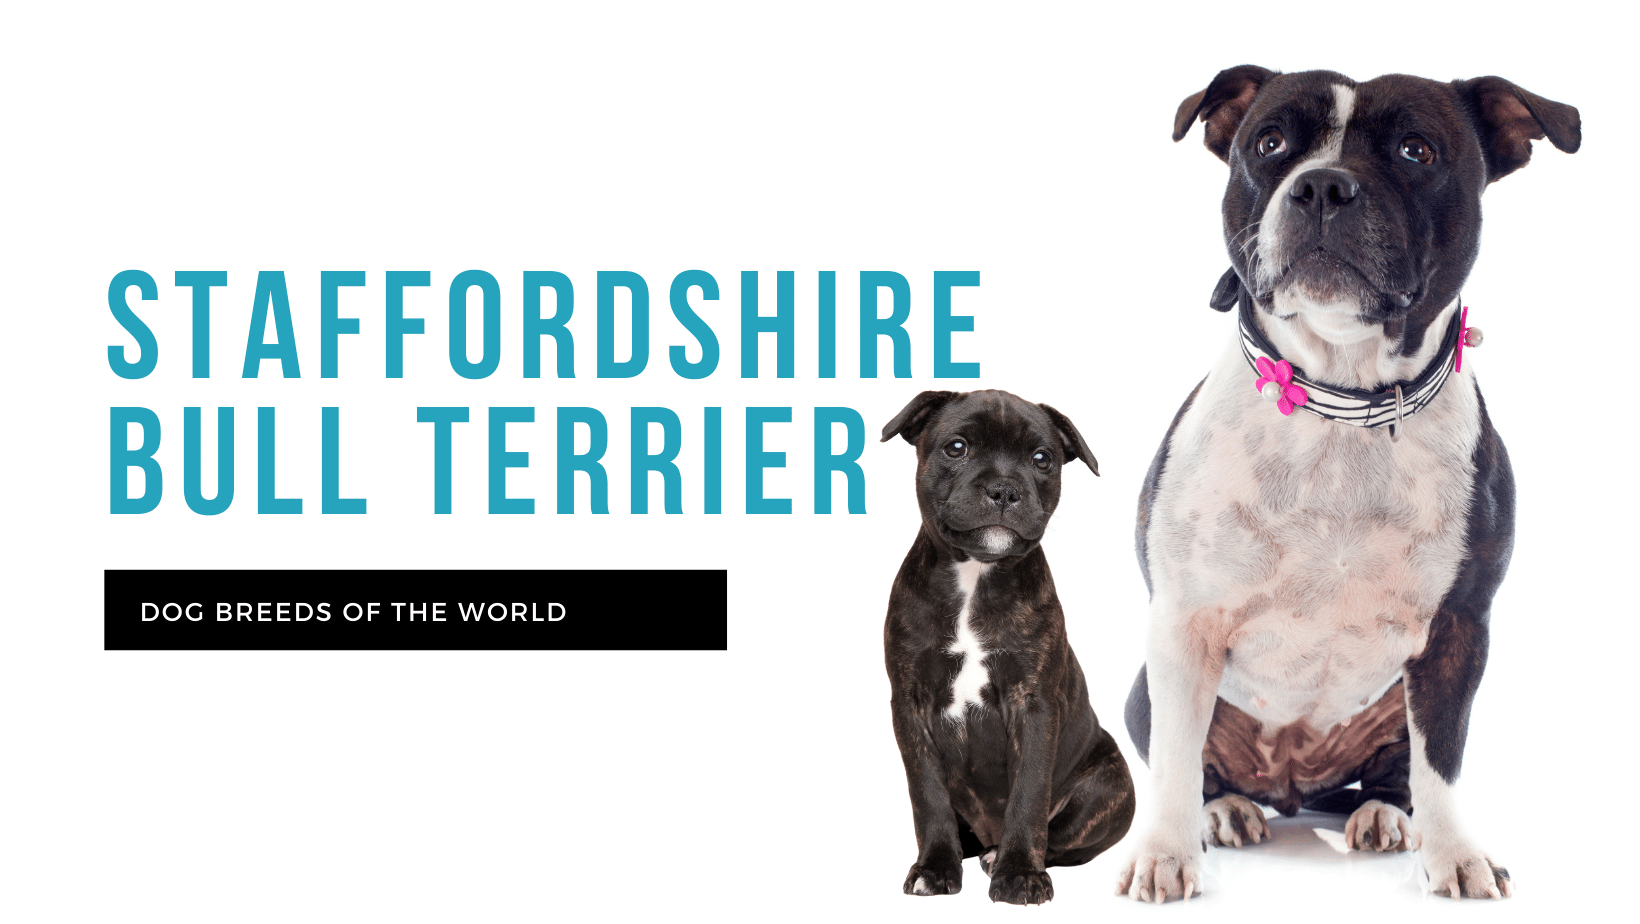 Staffordshire bull terrier, British, Companion, Loyal